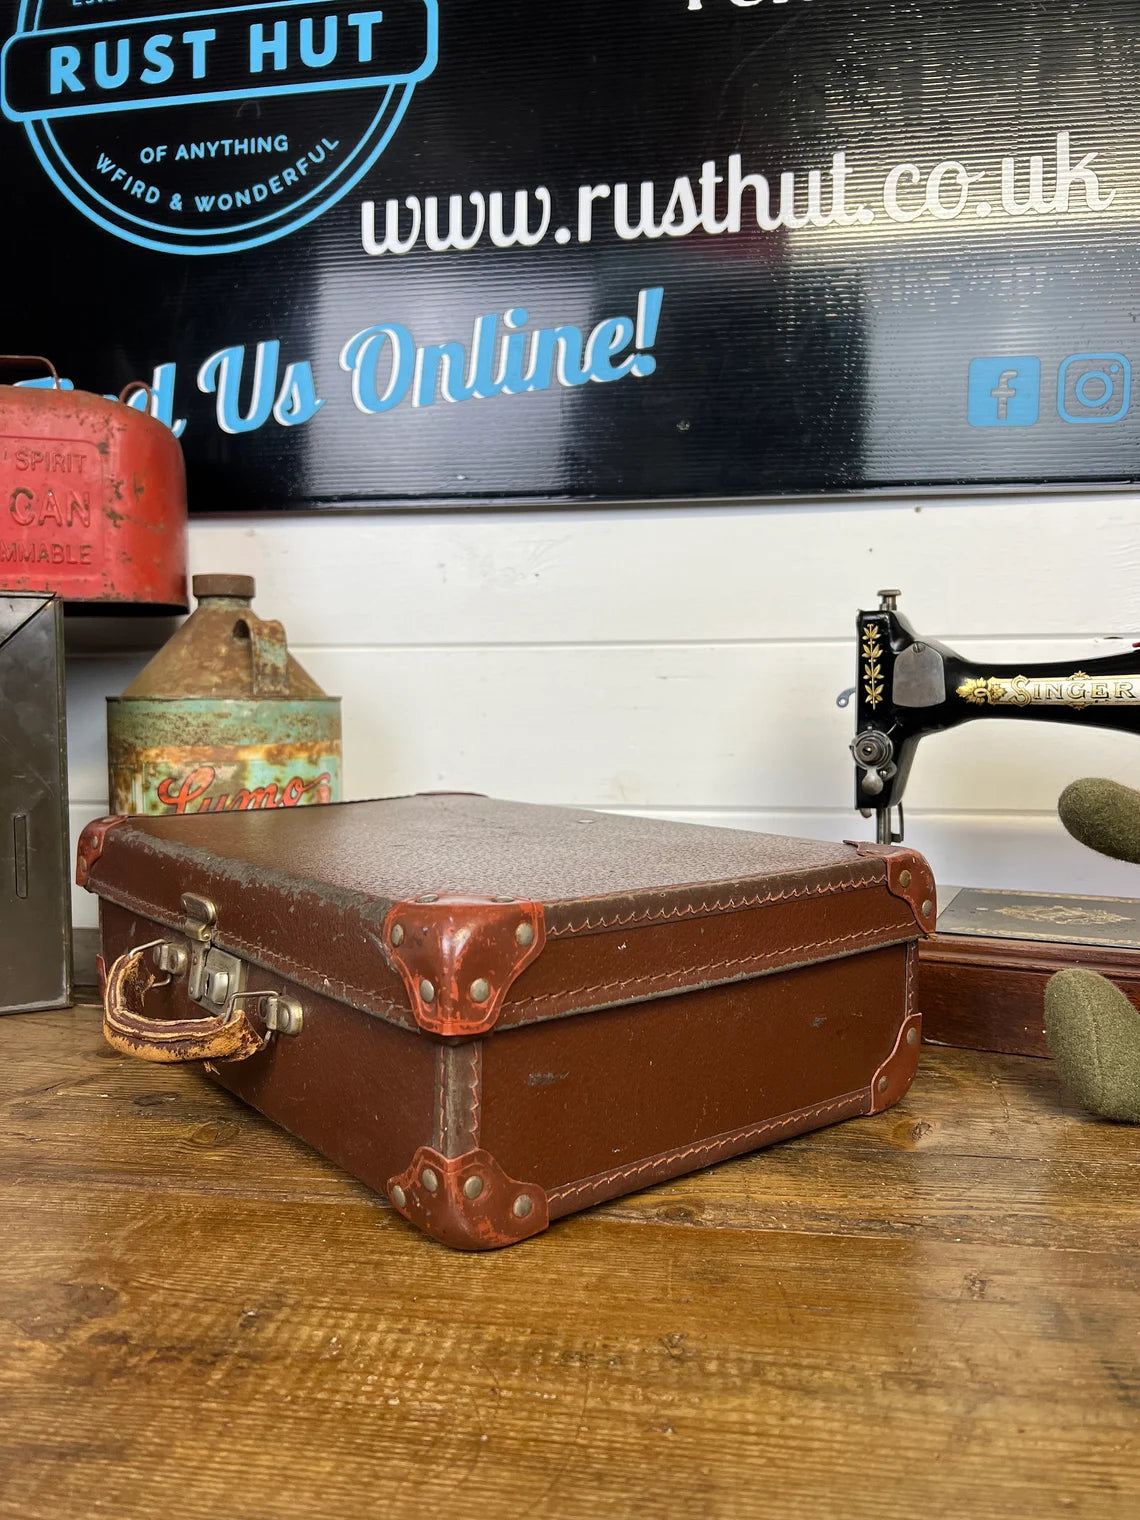 Small Vintage Suitcase Trunk Boho Rustic Home Decor Vintage Display Prop